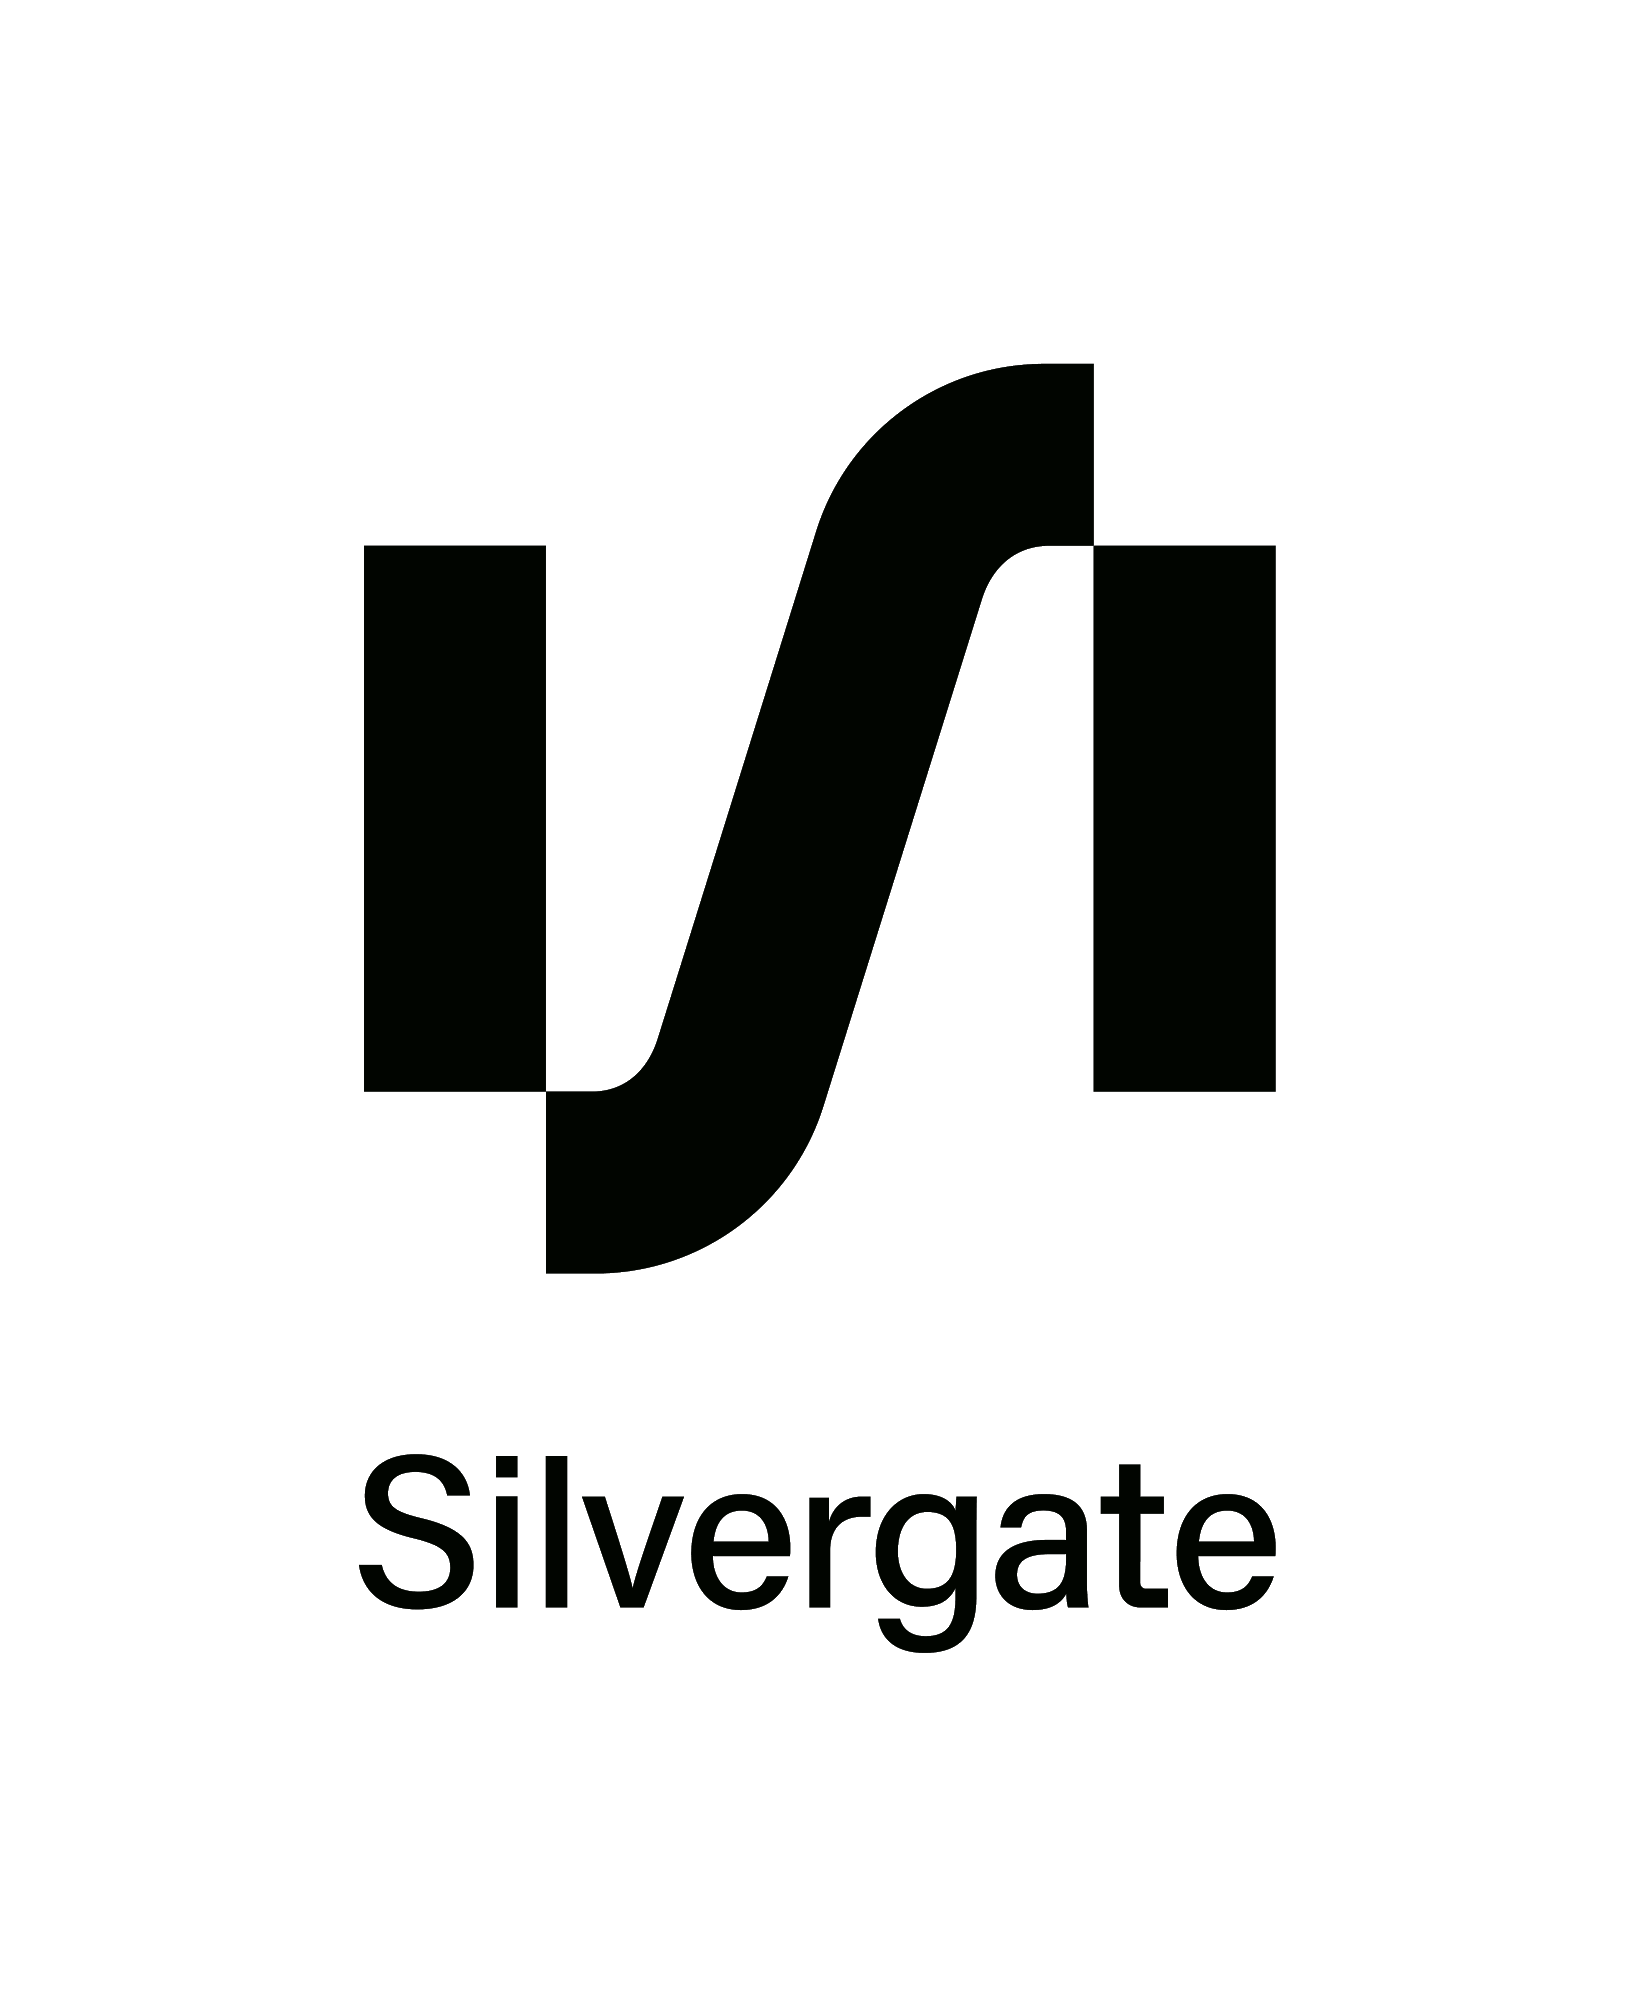 Silvergate Capital Corporation